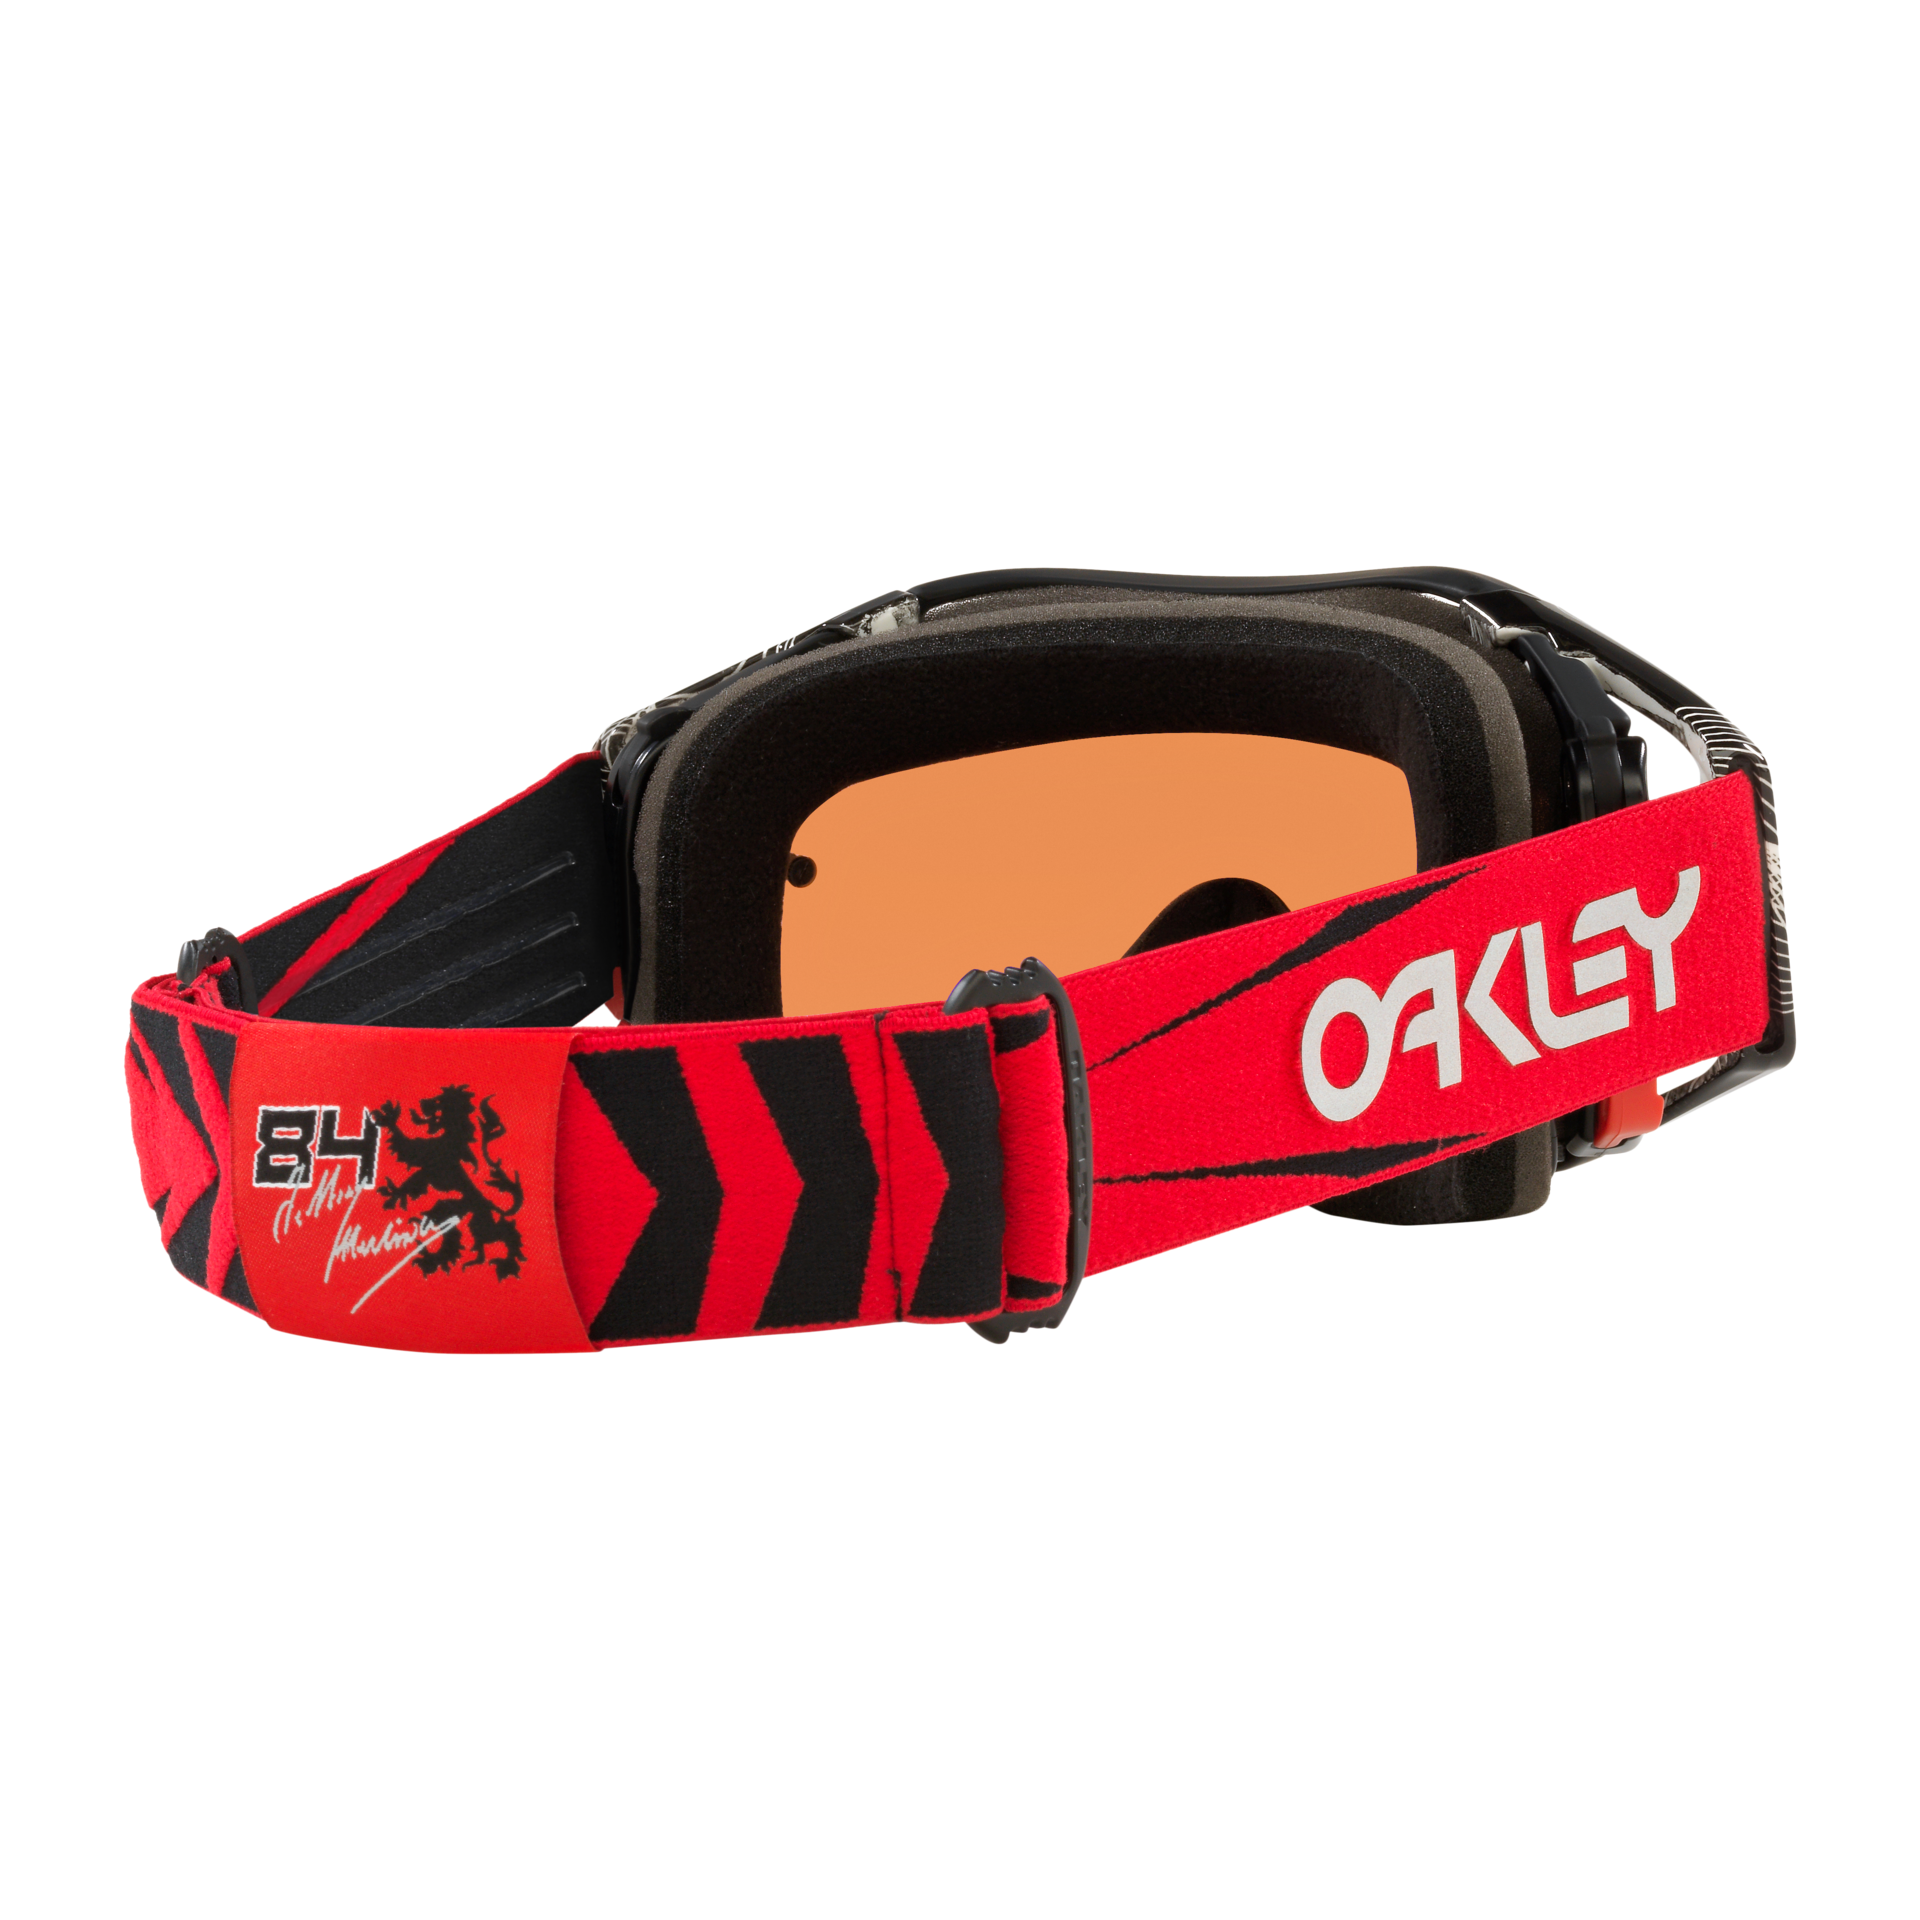 Oakley Airbrake MX Goggle Jeffrey Herlings Red/Black/White - Prizm Black Lens